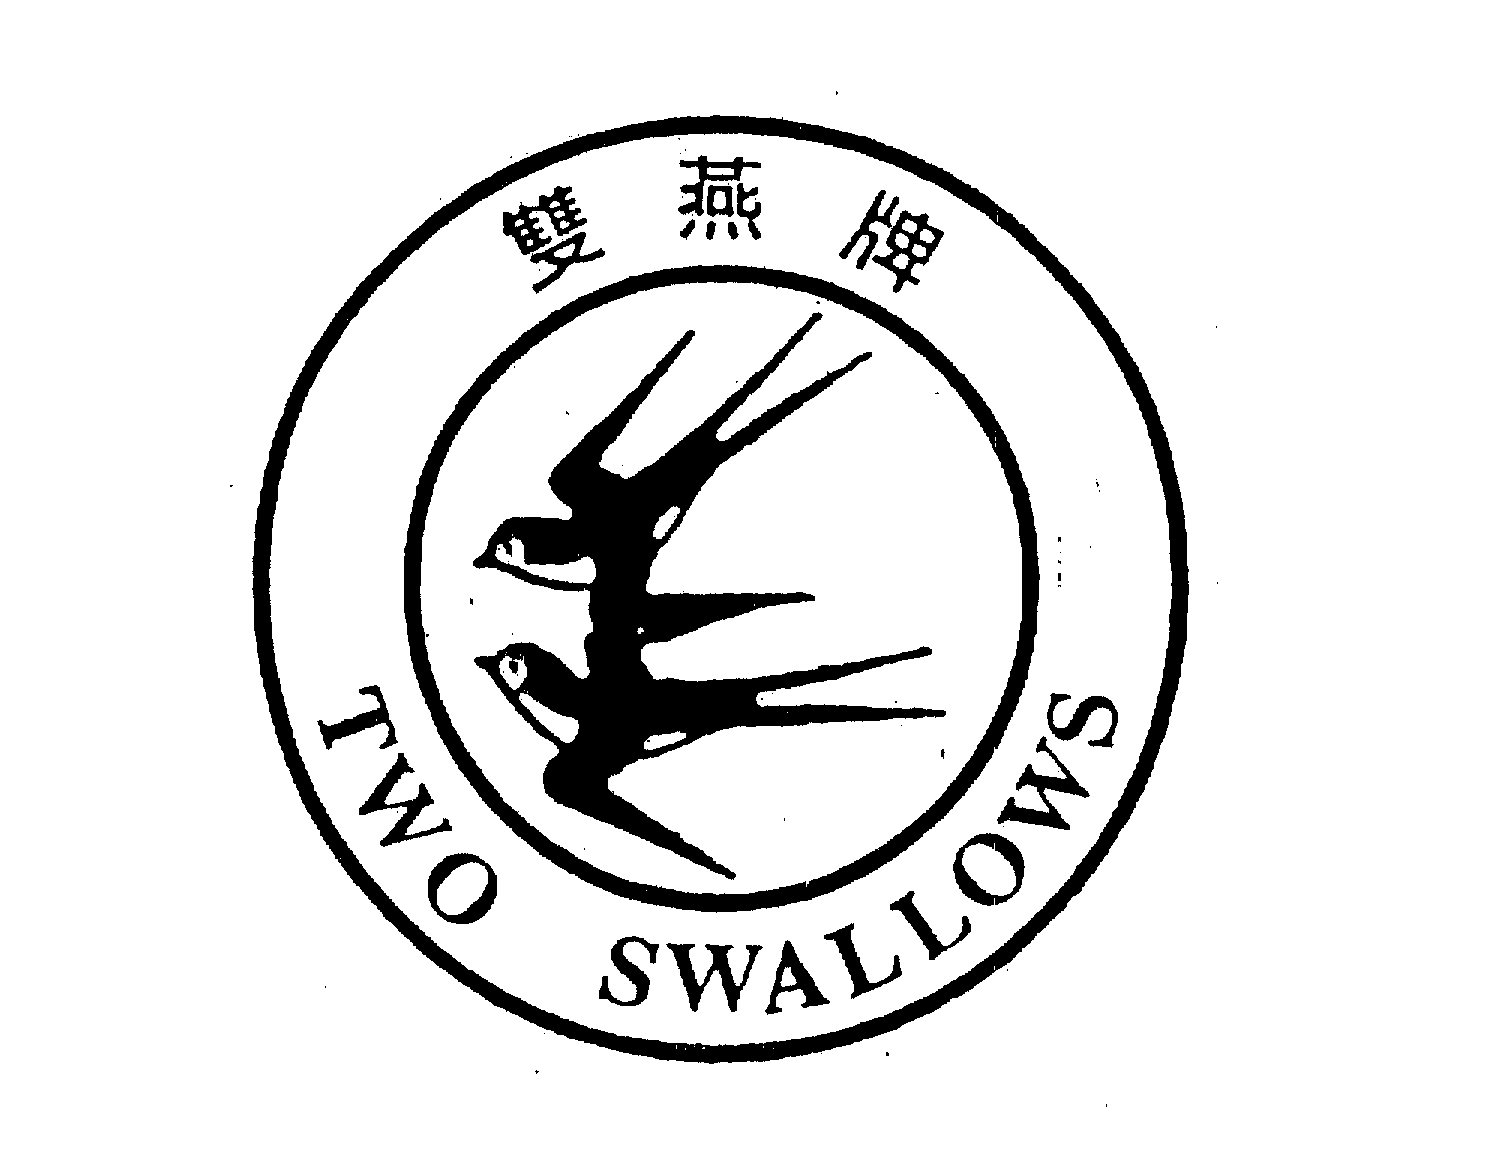  TWO SWALLOWS